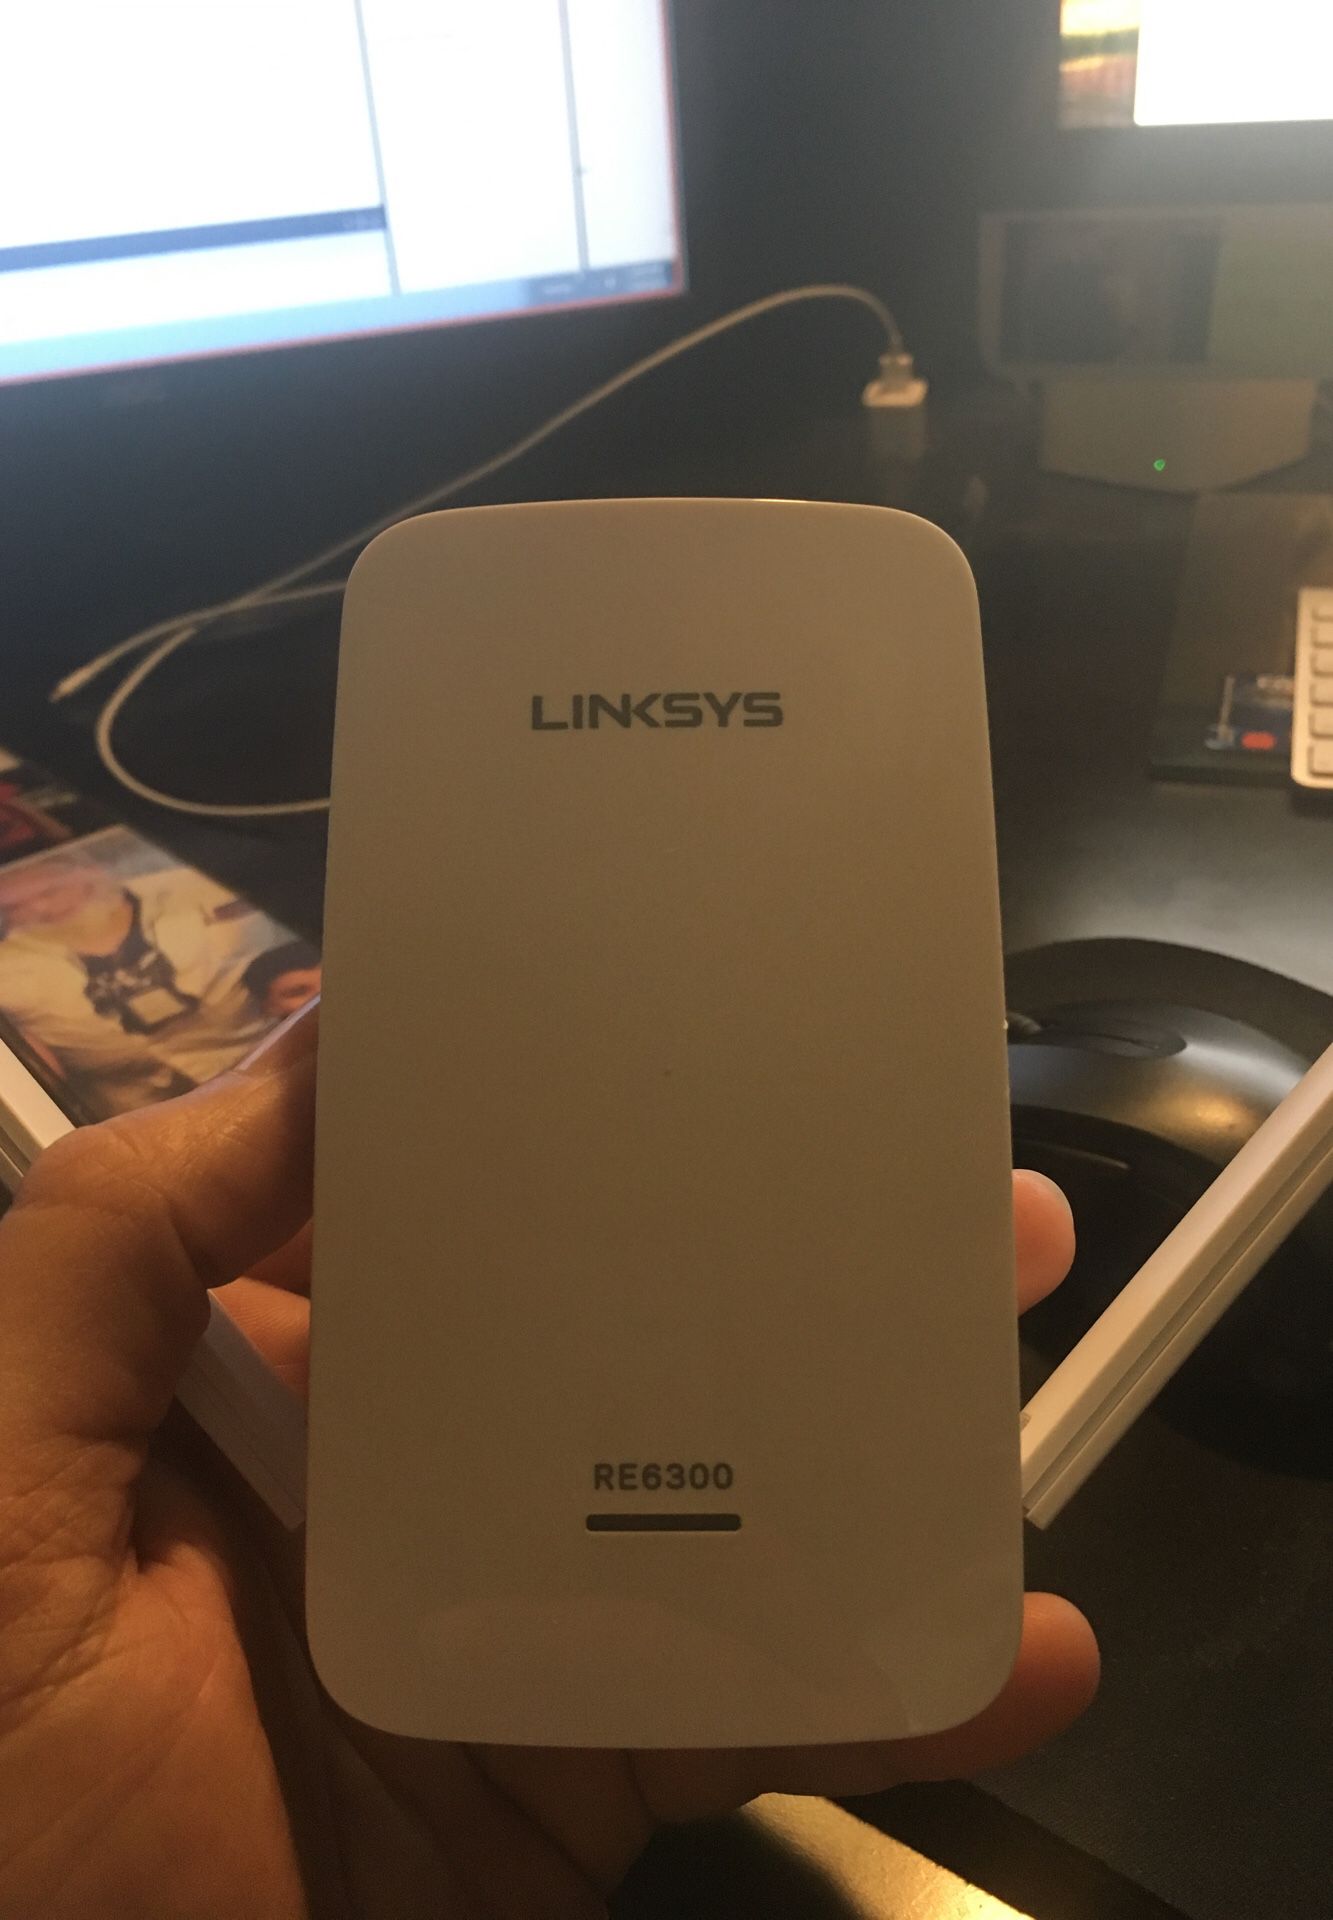 Linksys Wireless Extender RE6300